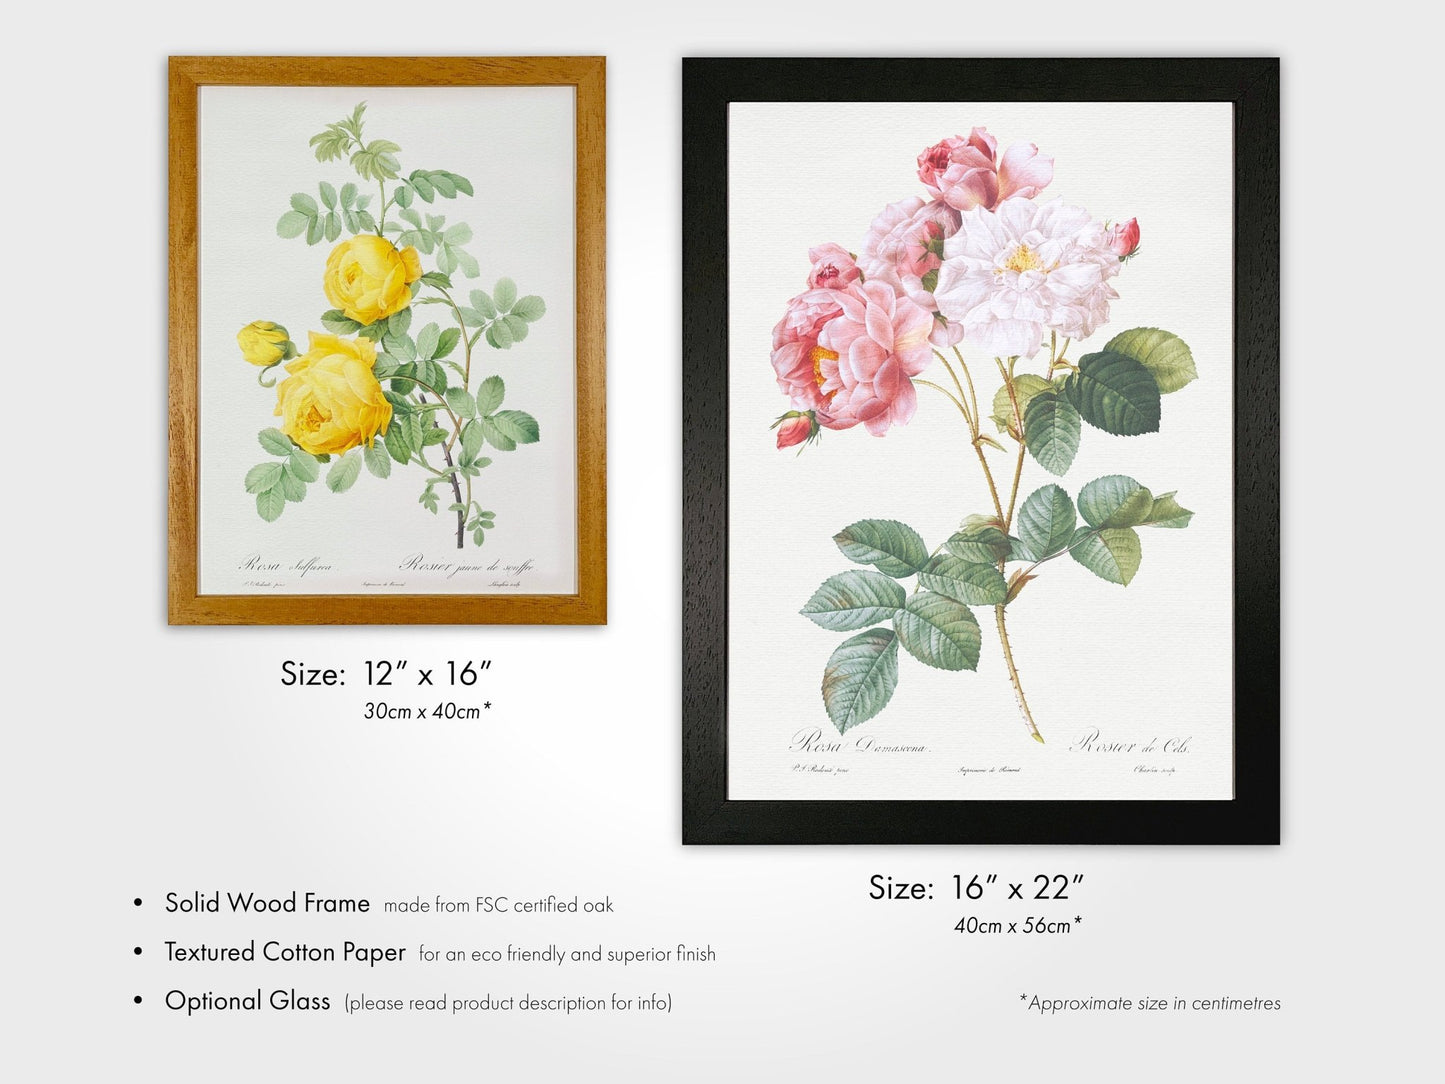 Olive (Olea Europaea) by Pierre-Joseph Redouté (Raphael of Flowers) - Pathos Studio - Art Prints